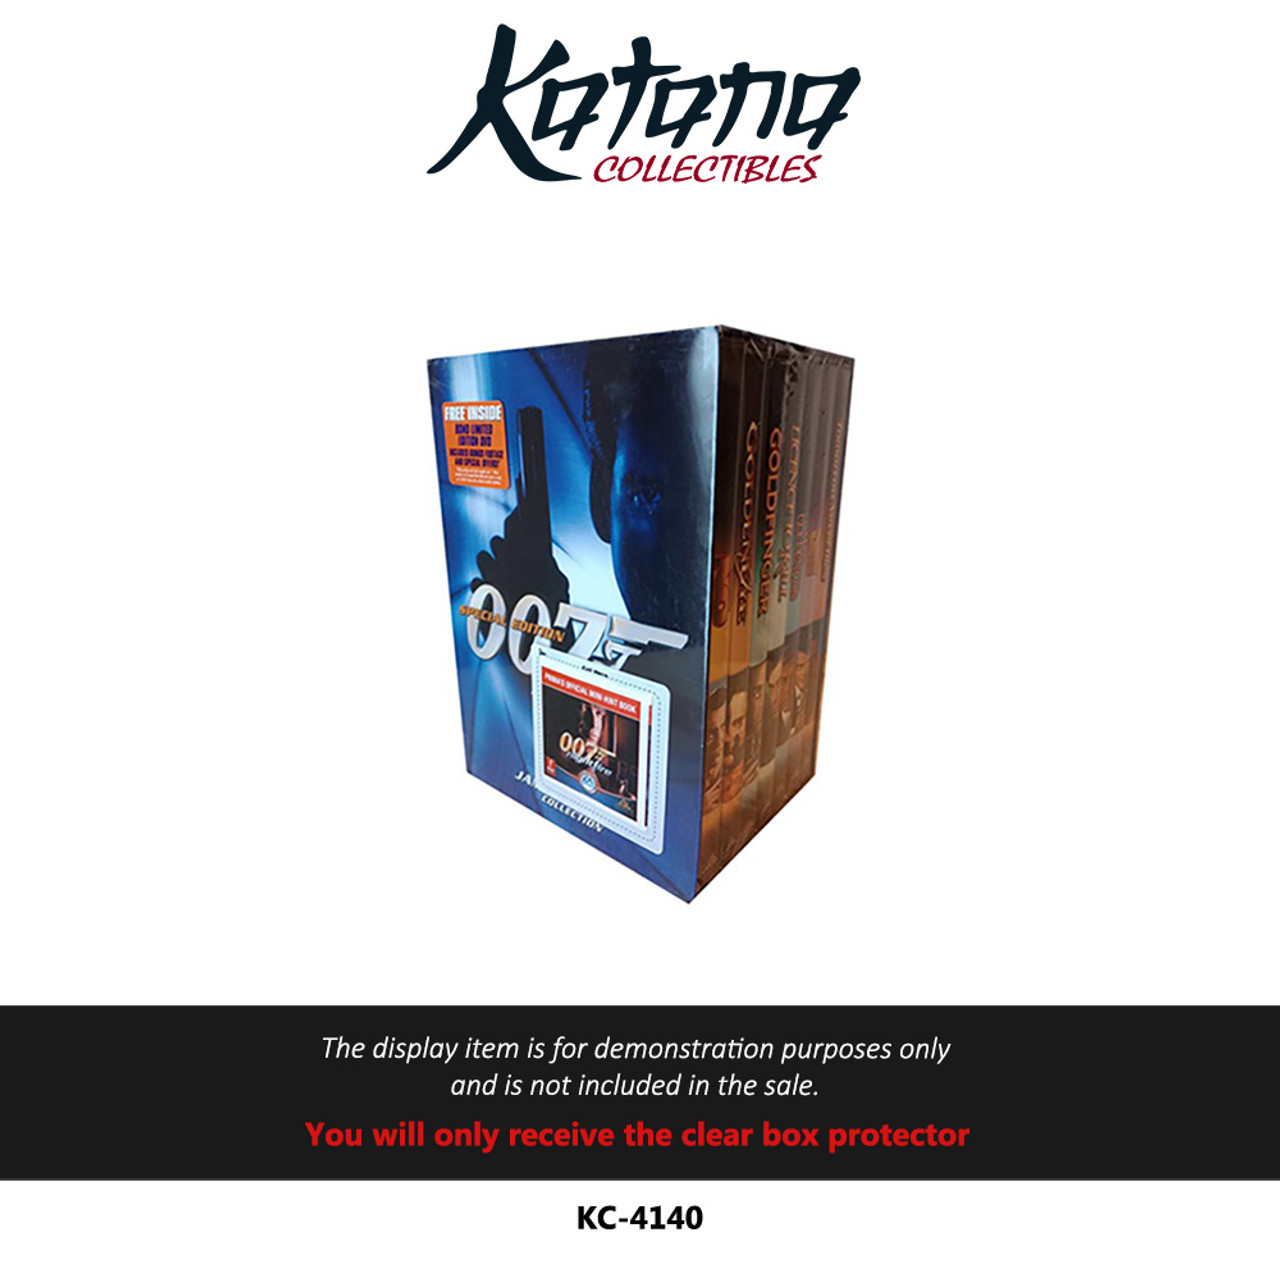 Katana Collectibles Protector For The James Bond Collection Volume 1 DVD Box Set